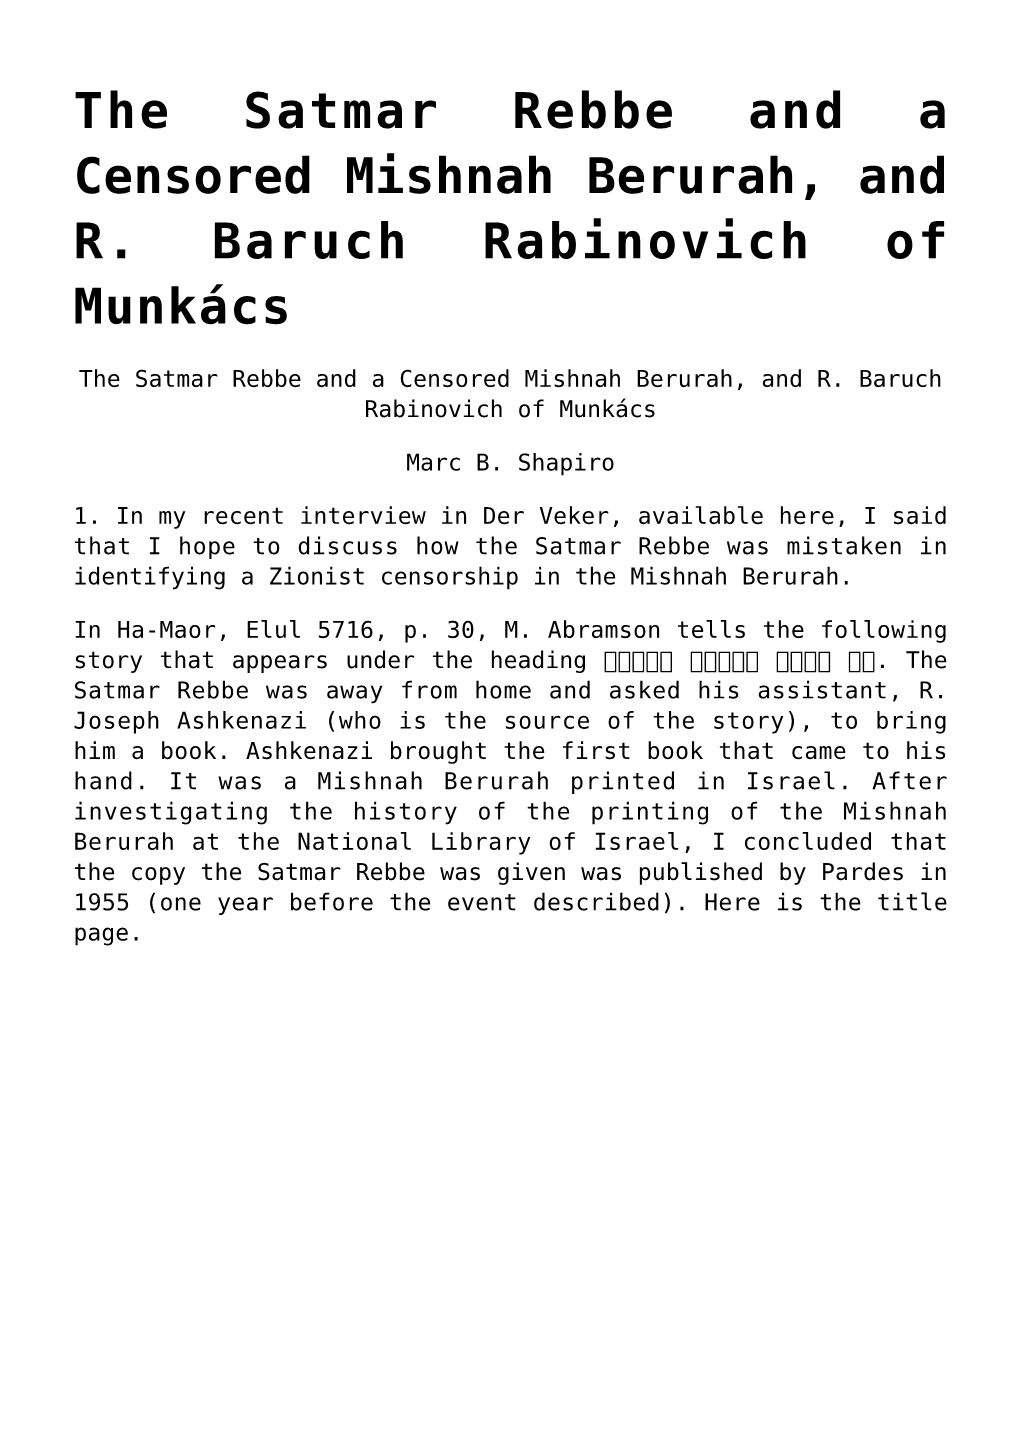 The Satmar Rebbe and a Censored Mishnah Berurah, and R. Baruch Rabinovich of Munkács